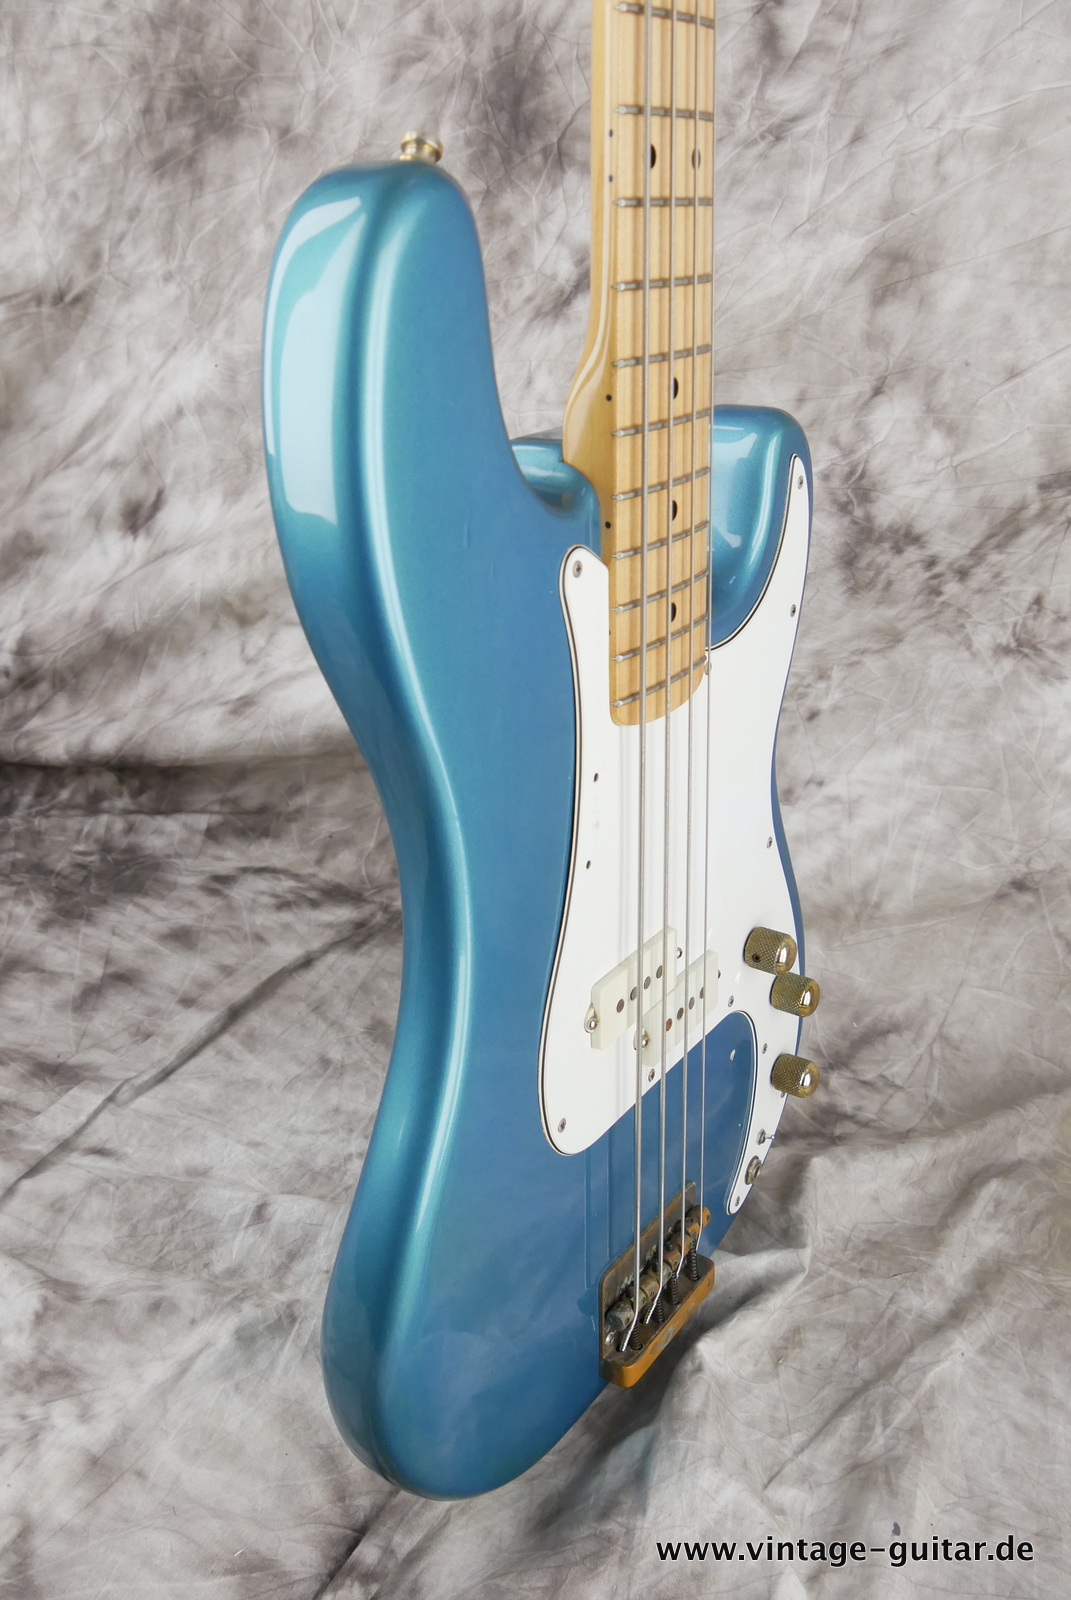 Fender_Precision_Special_USA_lake_placid_blue_1983-005.JPG